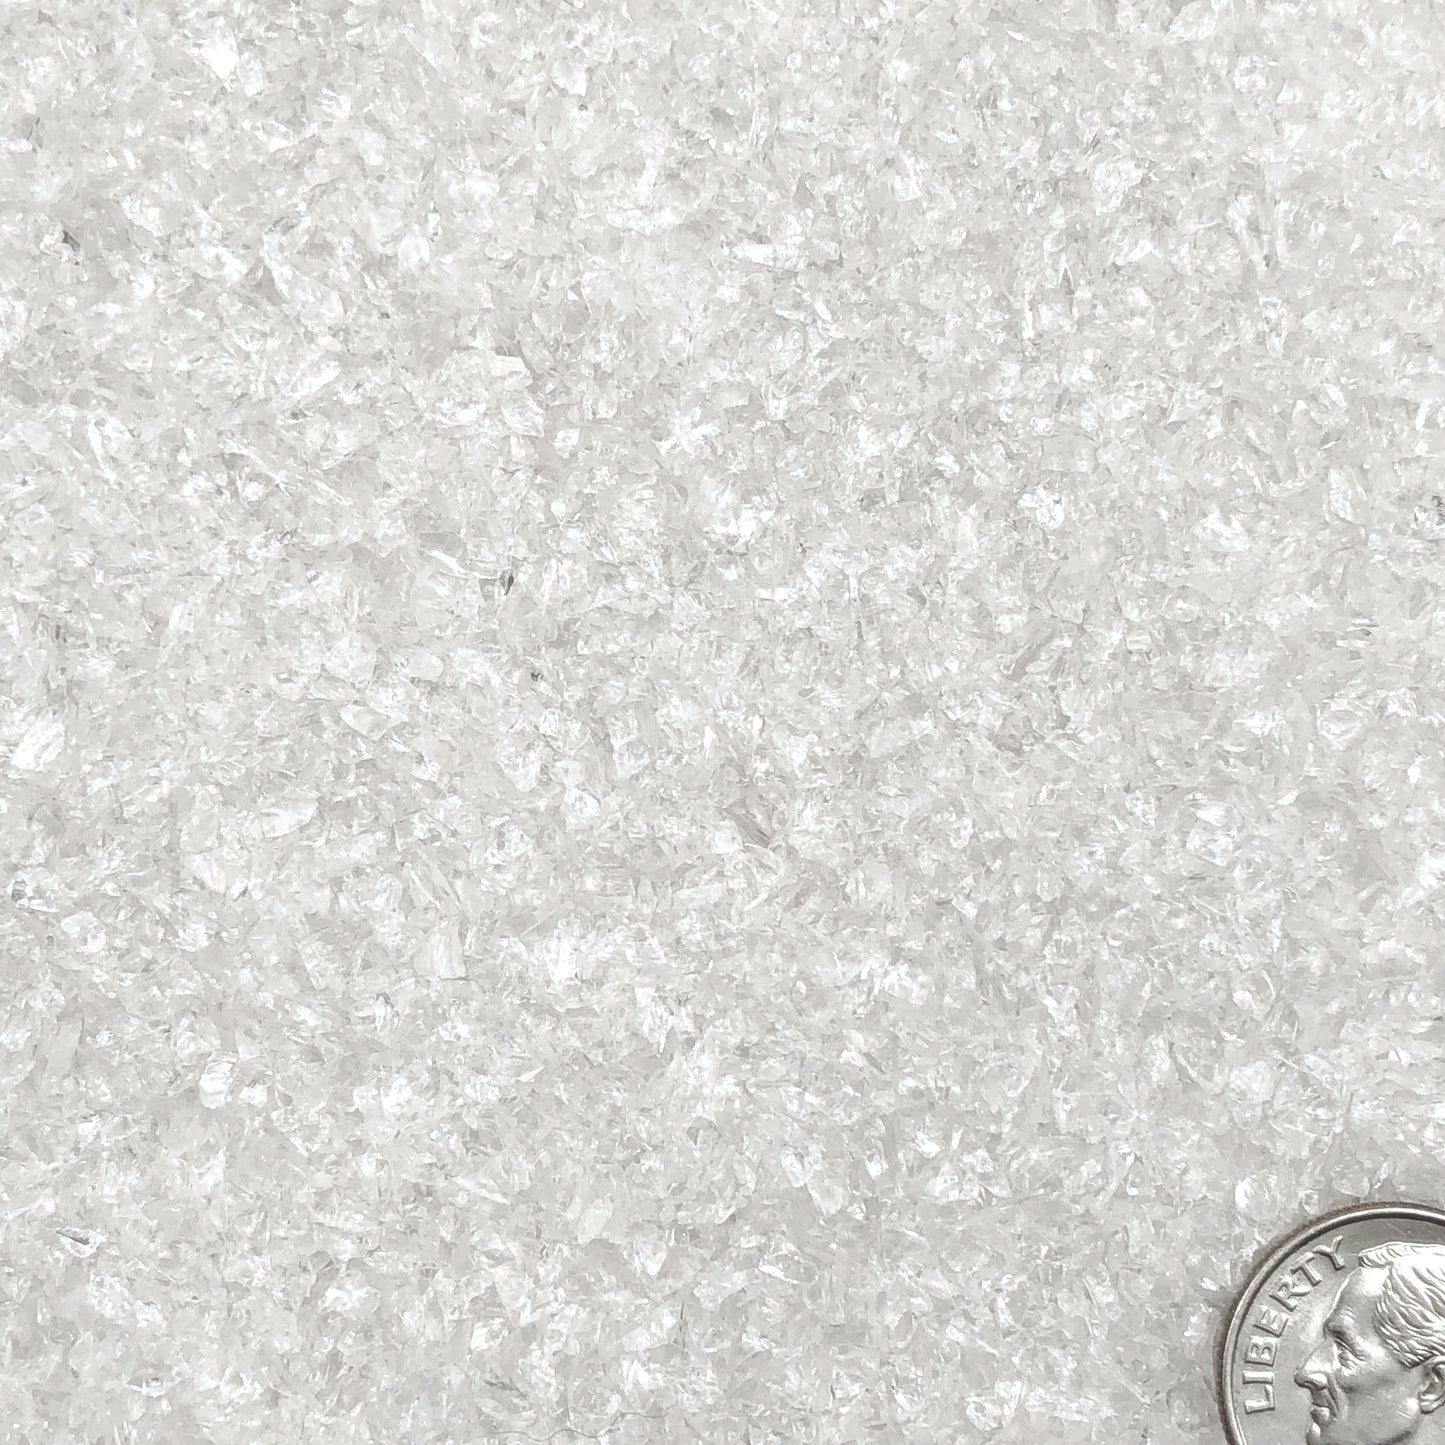 Crushed Clear Quartz (Rock Crystal) from Brazil, Medium Crush, Sand Size, 2mm - 0.25mm